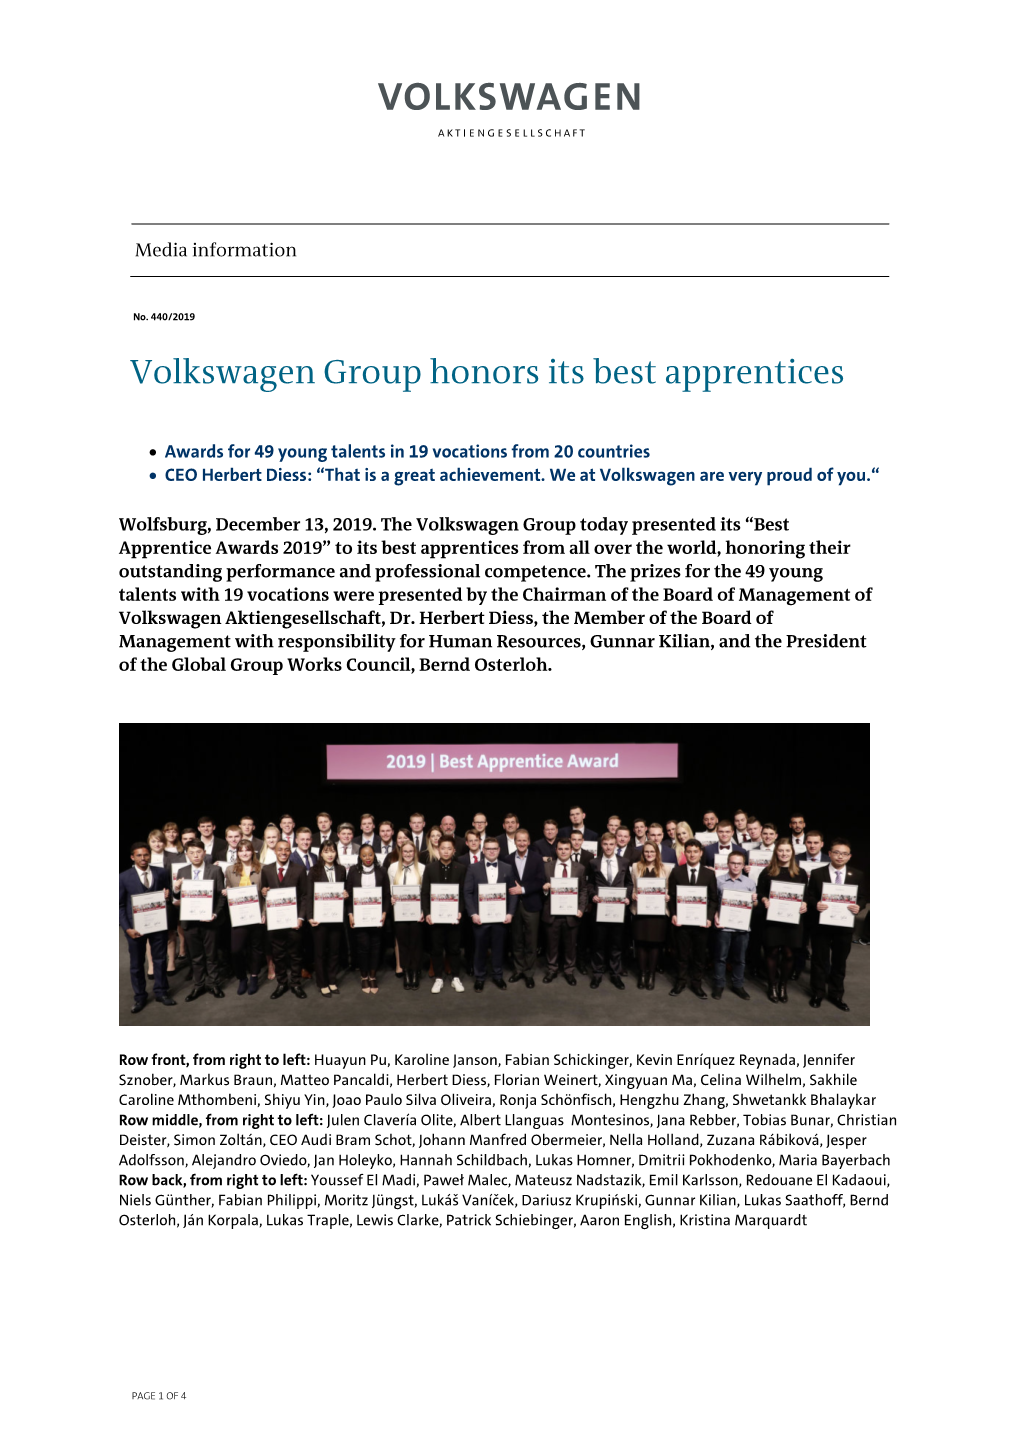 Volkswagen Group Honors Its Best Apprentices